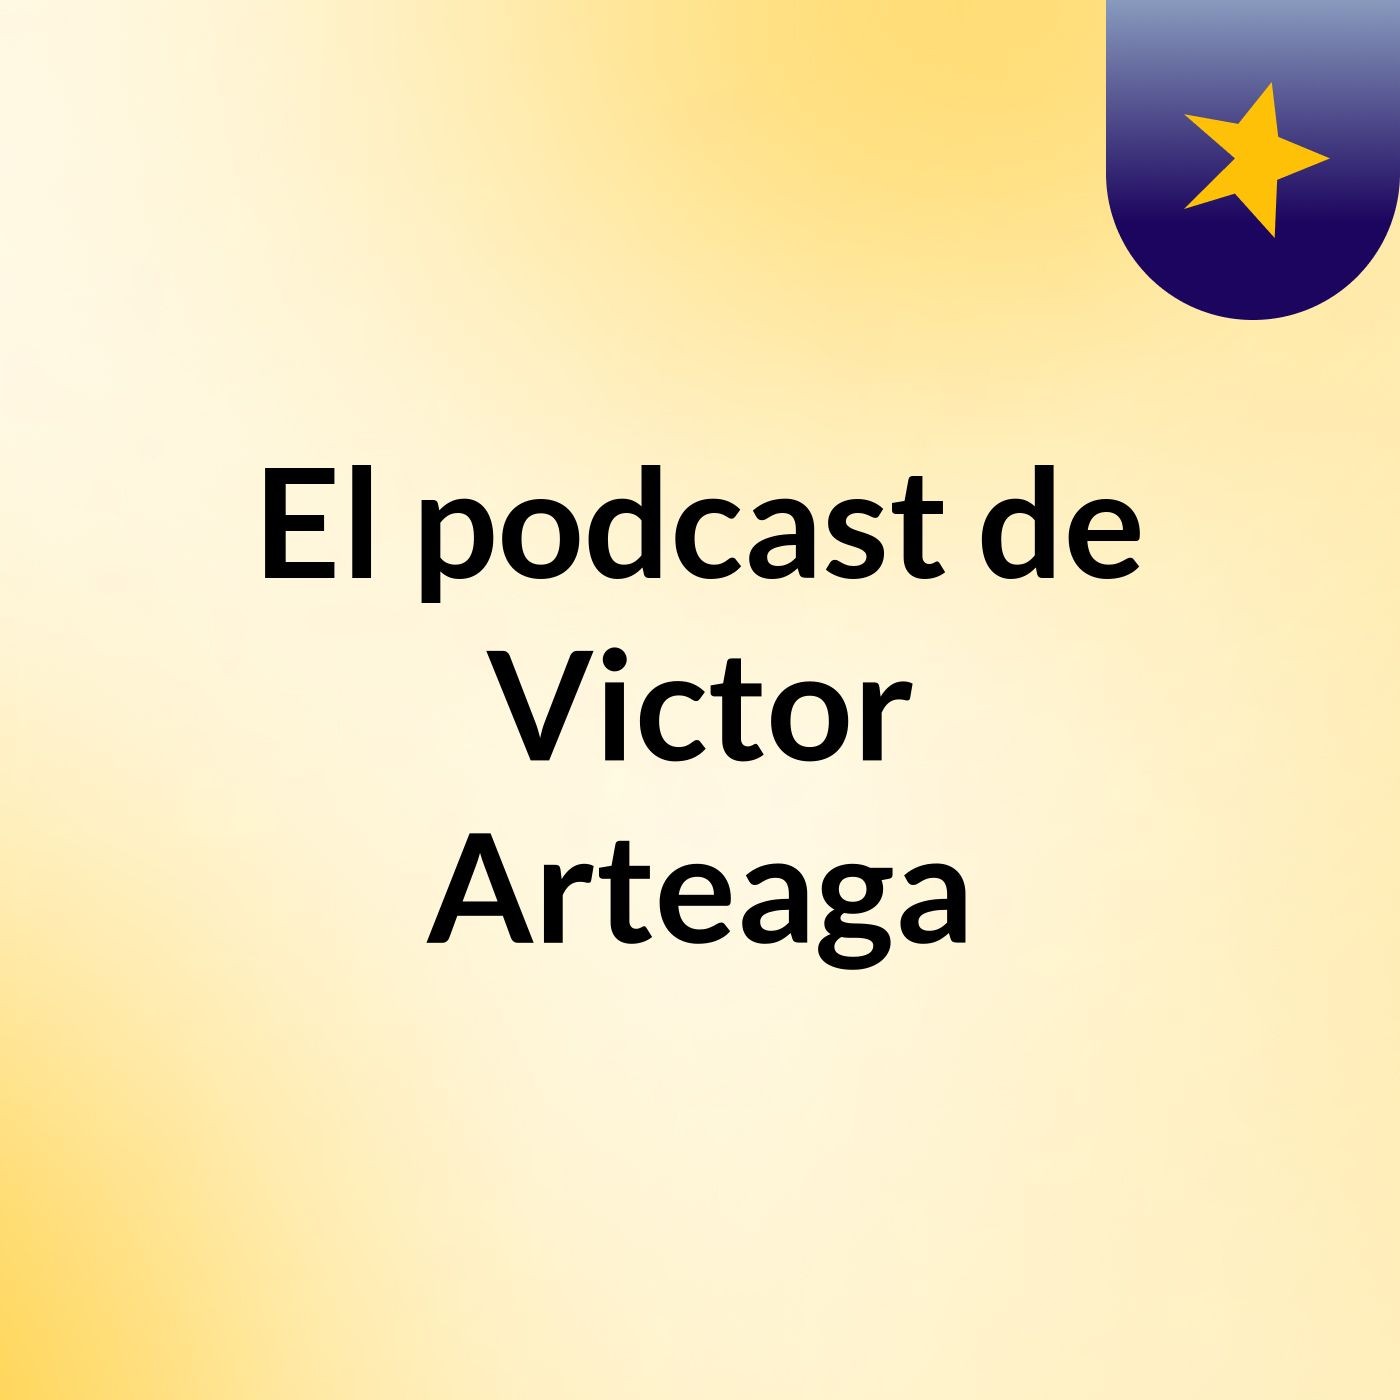 El podcast de Victor Arteaga